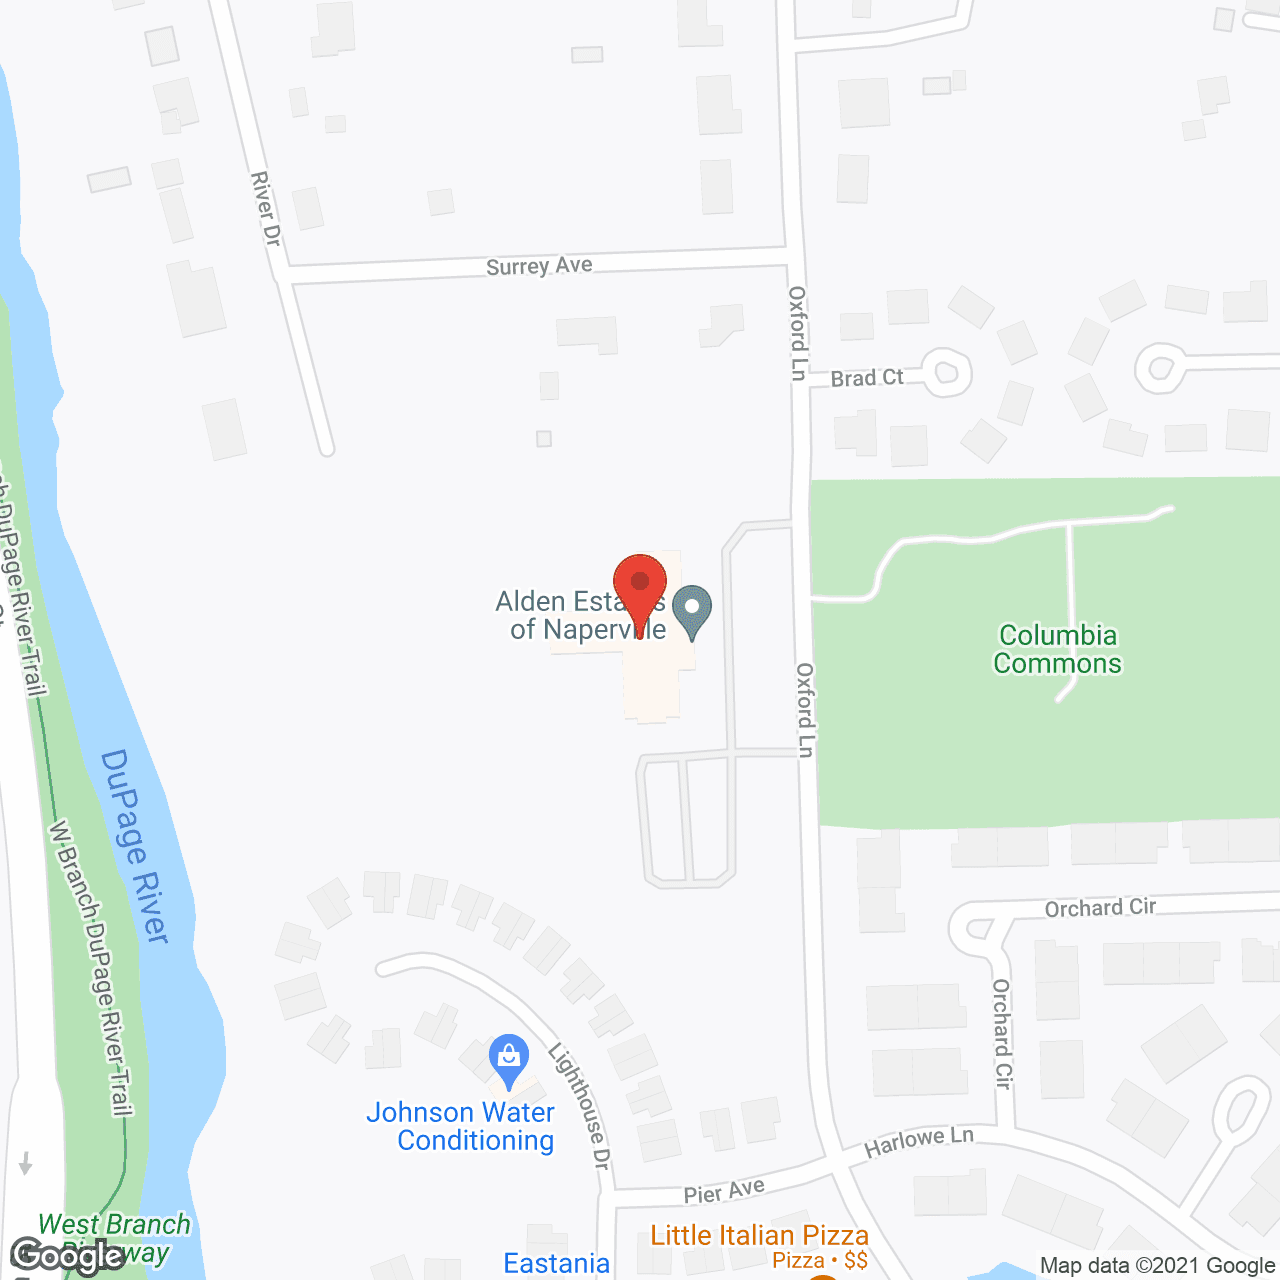 Alden of Naperville in google map